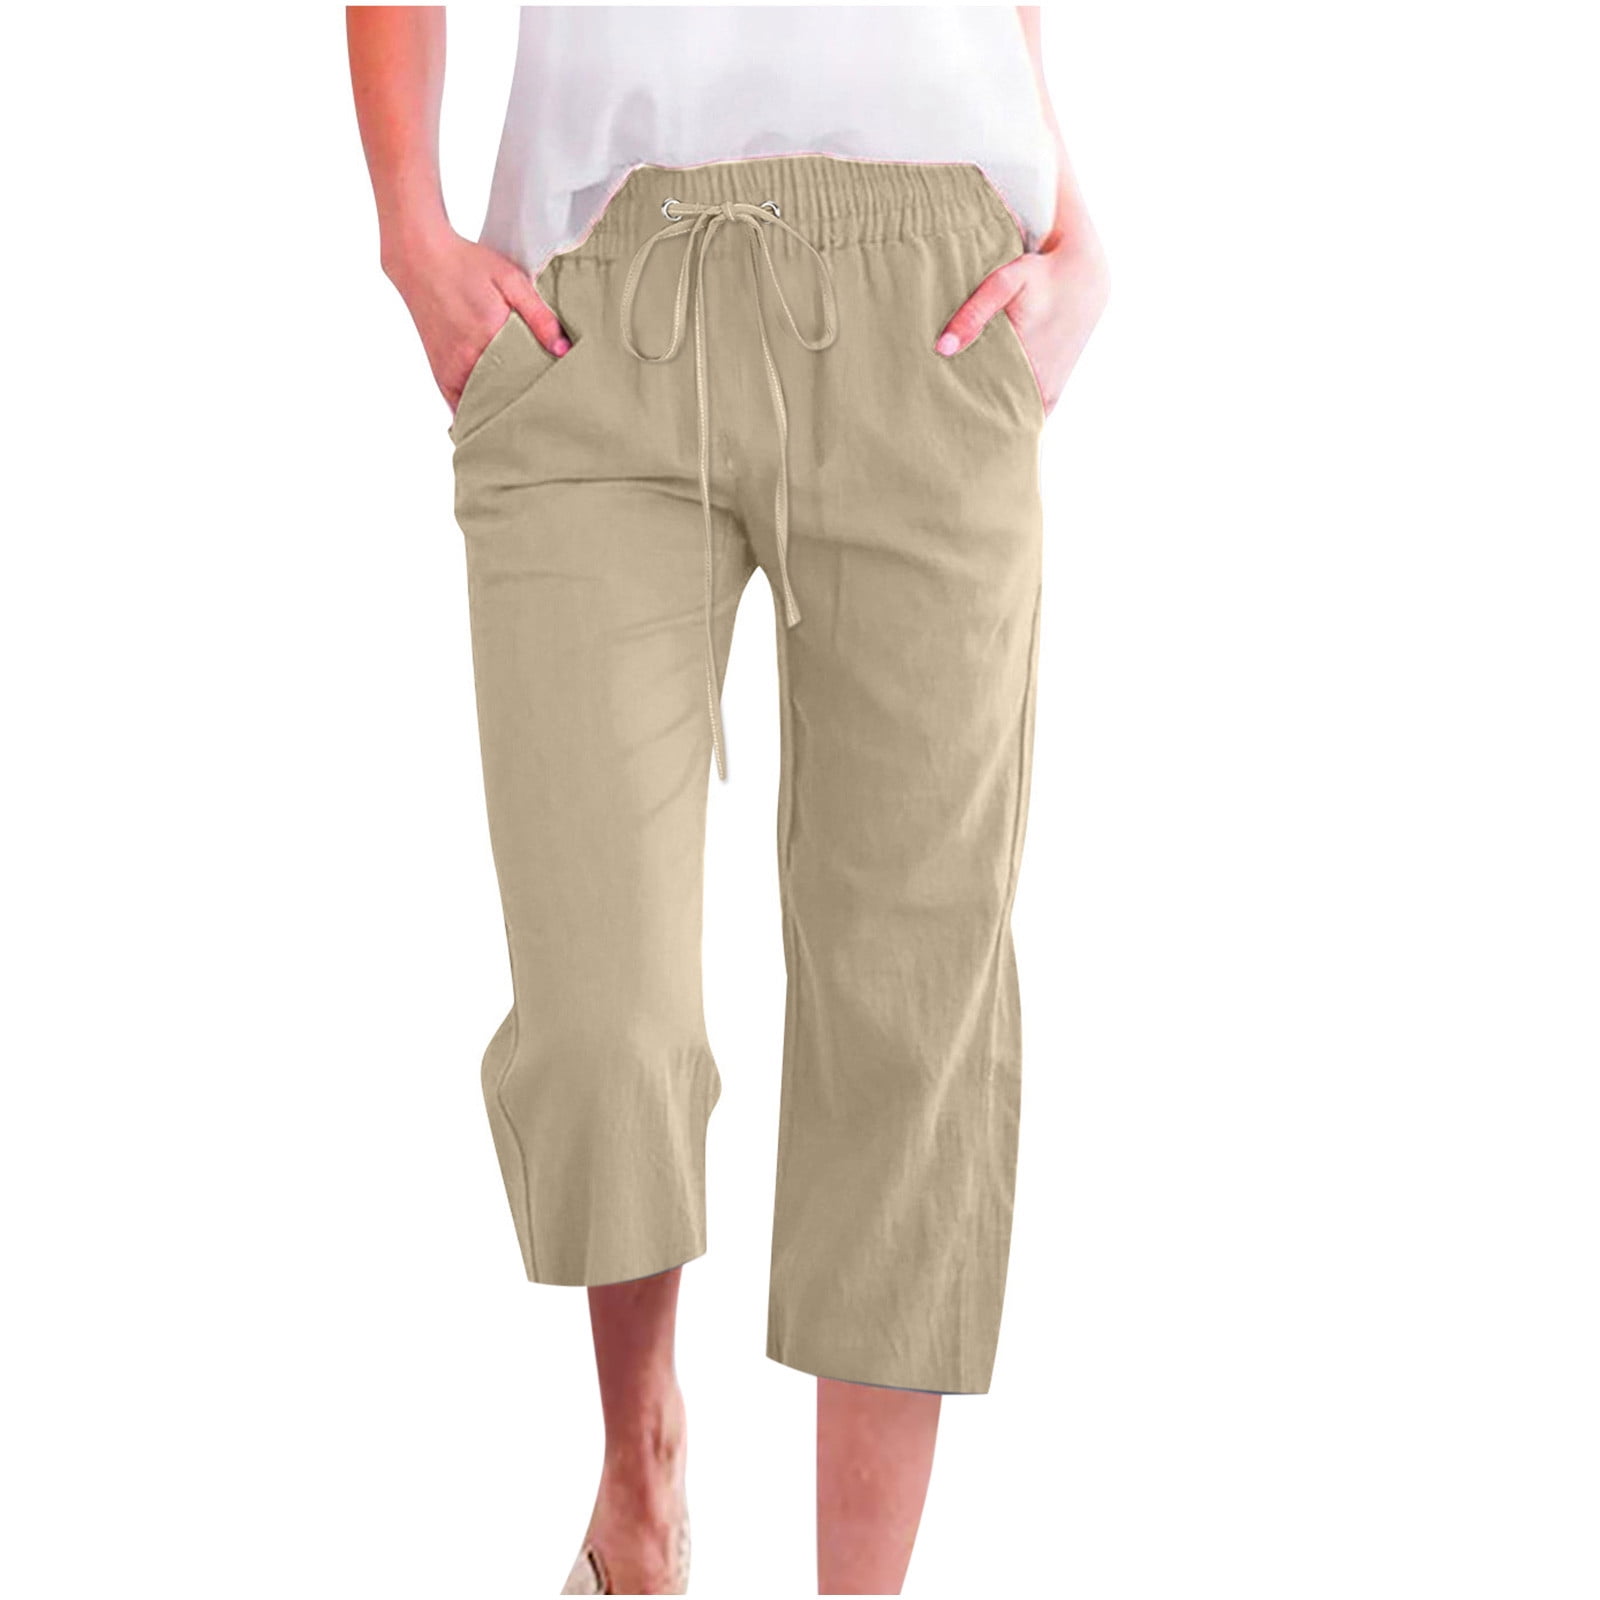 Xihbxyly Linen Pants for Women Womens Pants Cotton Linen Long Lounge ...